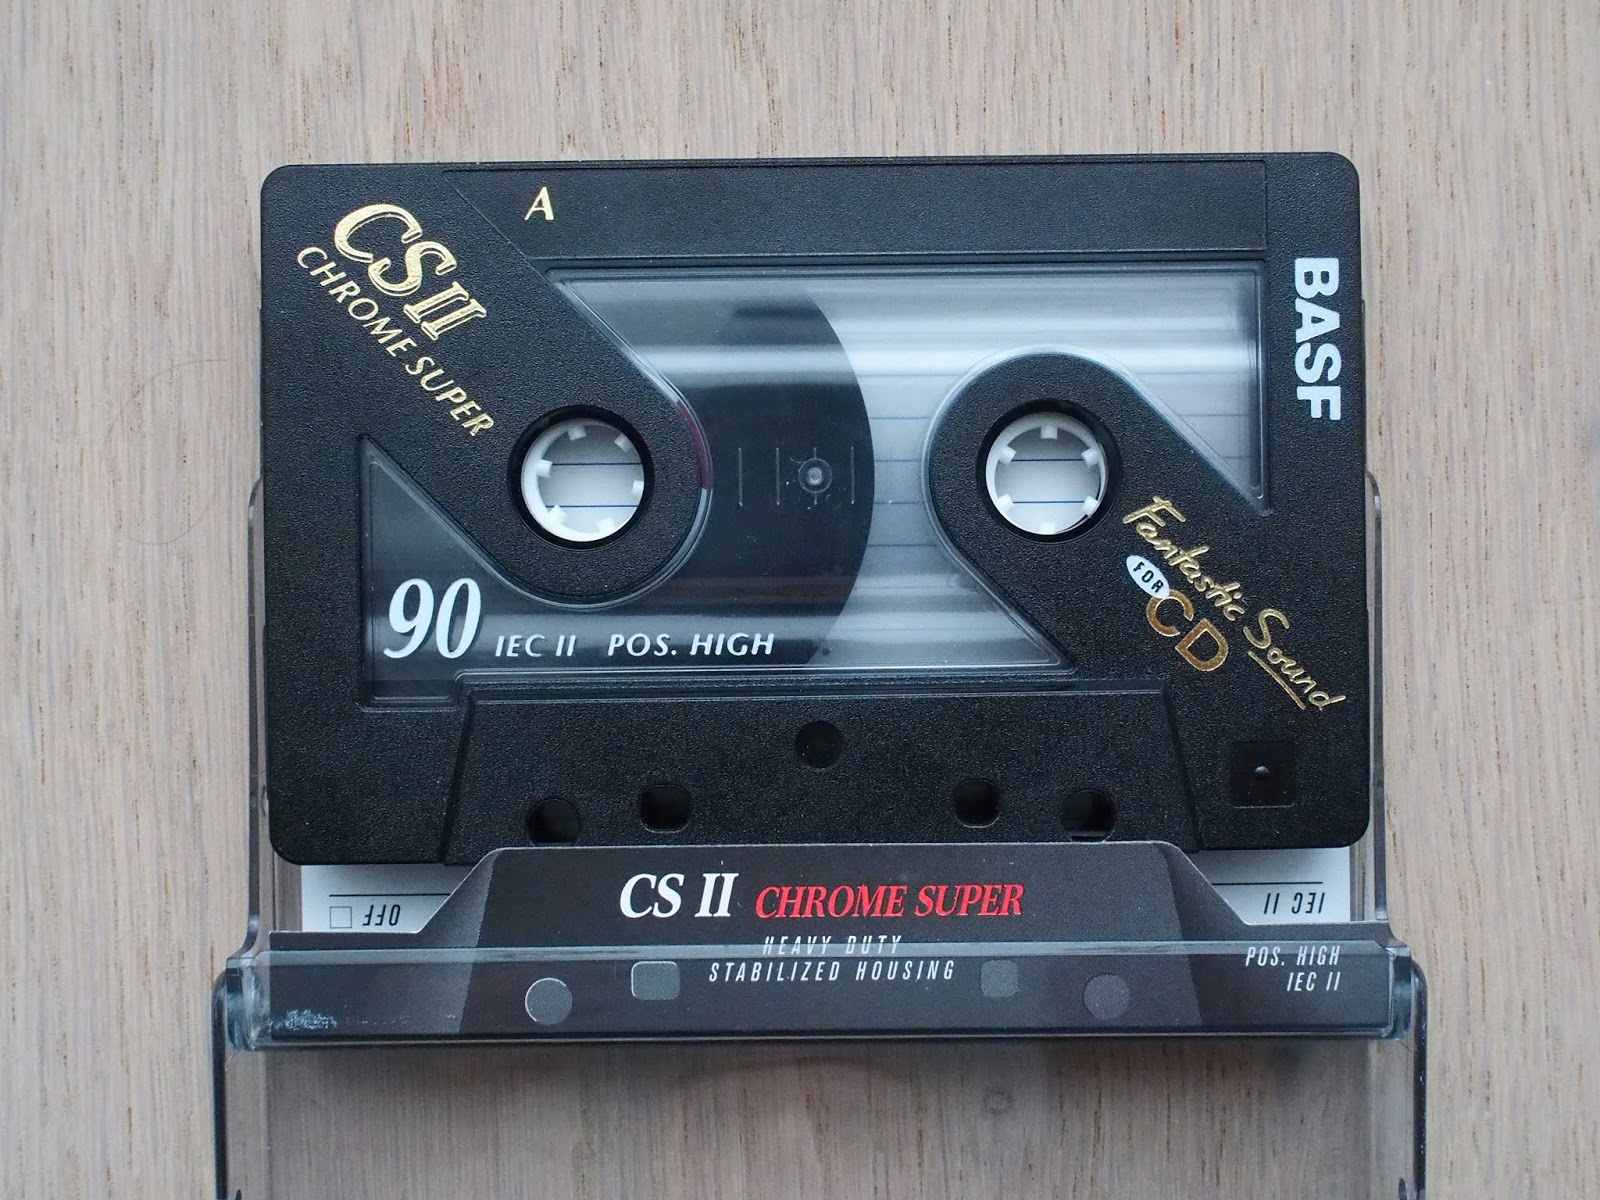 BASF Chrome Super CS II 2 90 Audio Cinta de Cassette IEC TYPE II para CD 